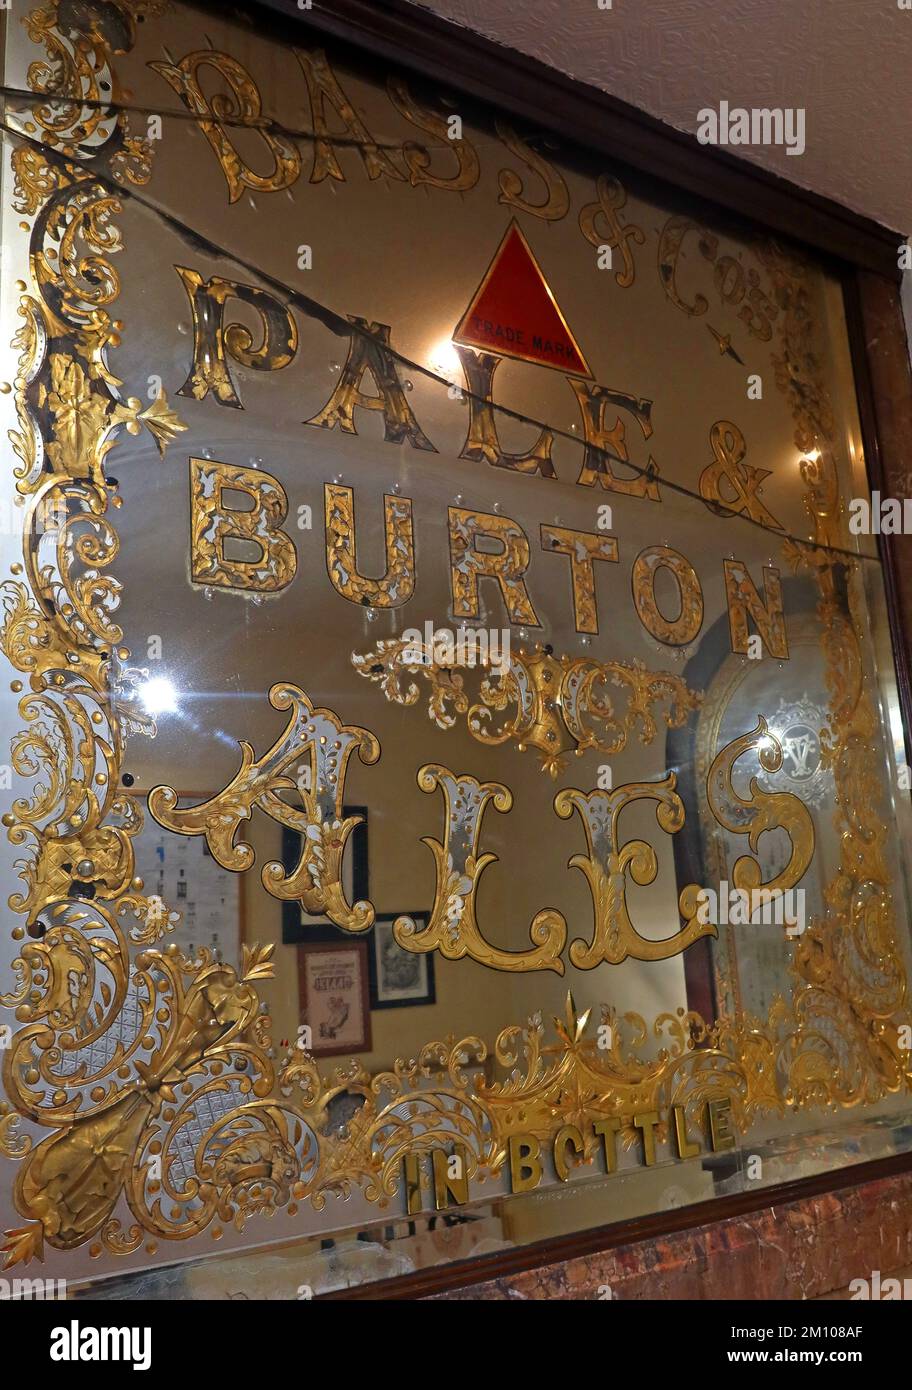 Bass & Co Burton Ale mirror, The Viaduct Tavern, Fullers pub, 126 Newgate St, London, England, UK,  EC1A 7AA Stock Photo